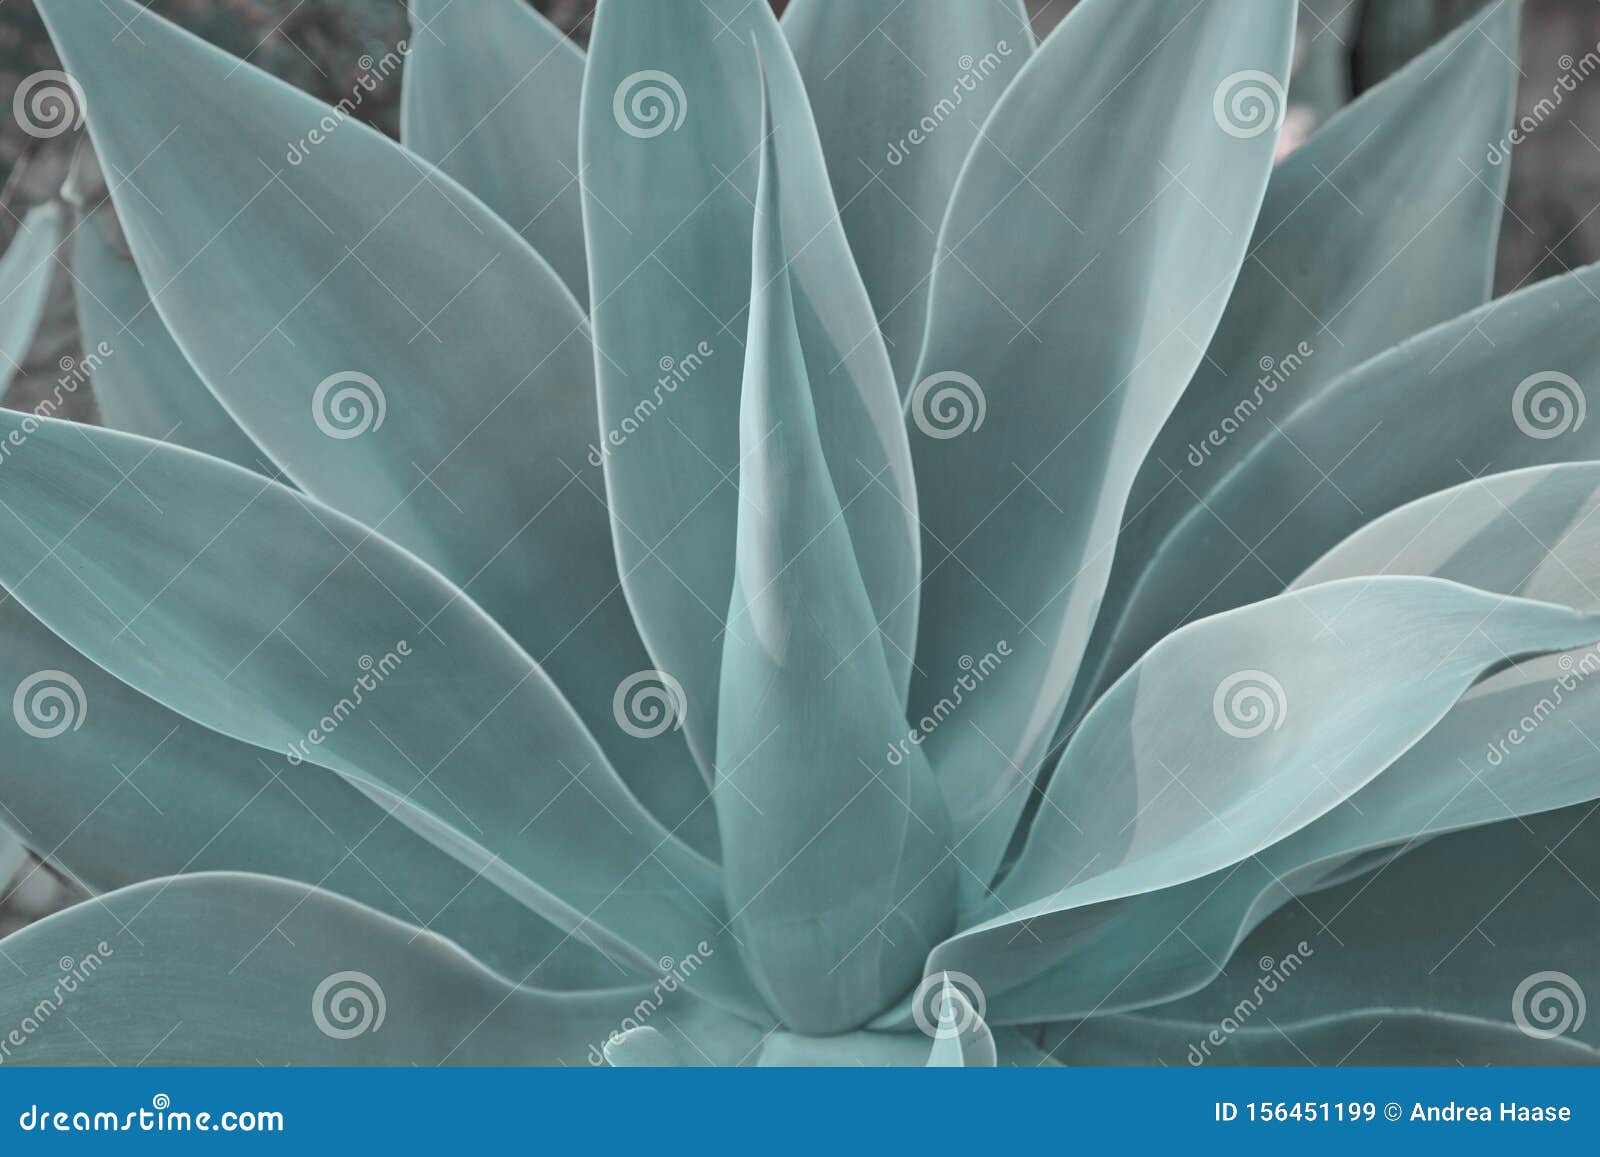 azul agave plant close up